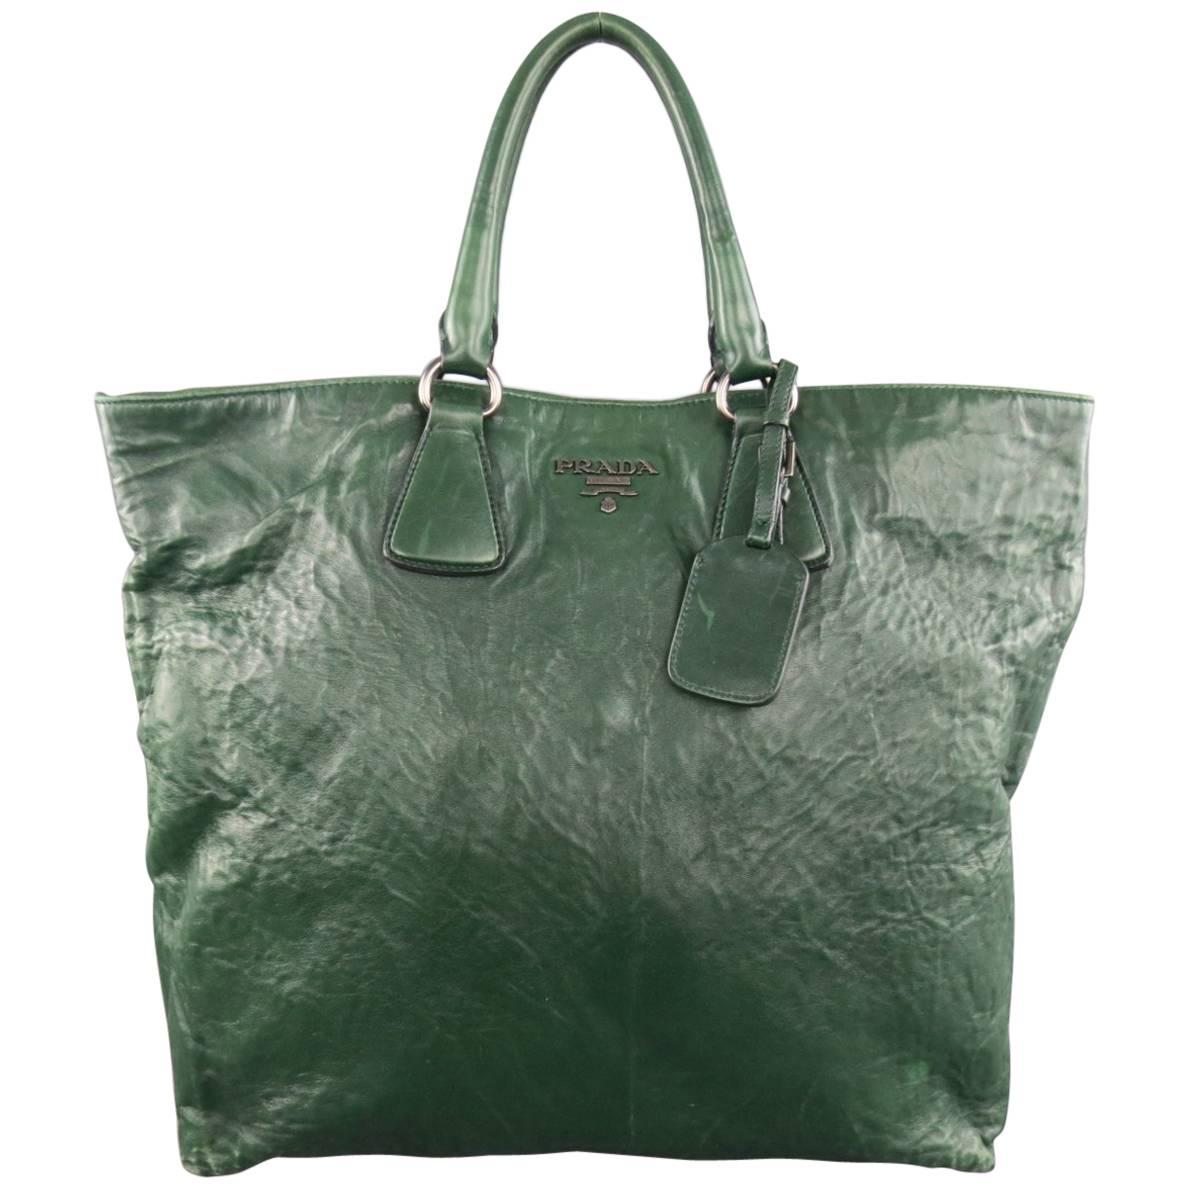 PRADA Green Textured Leather Tote Handbag